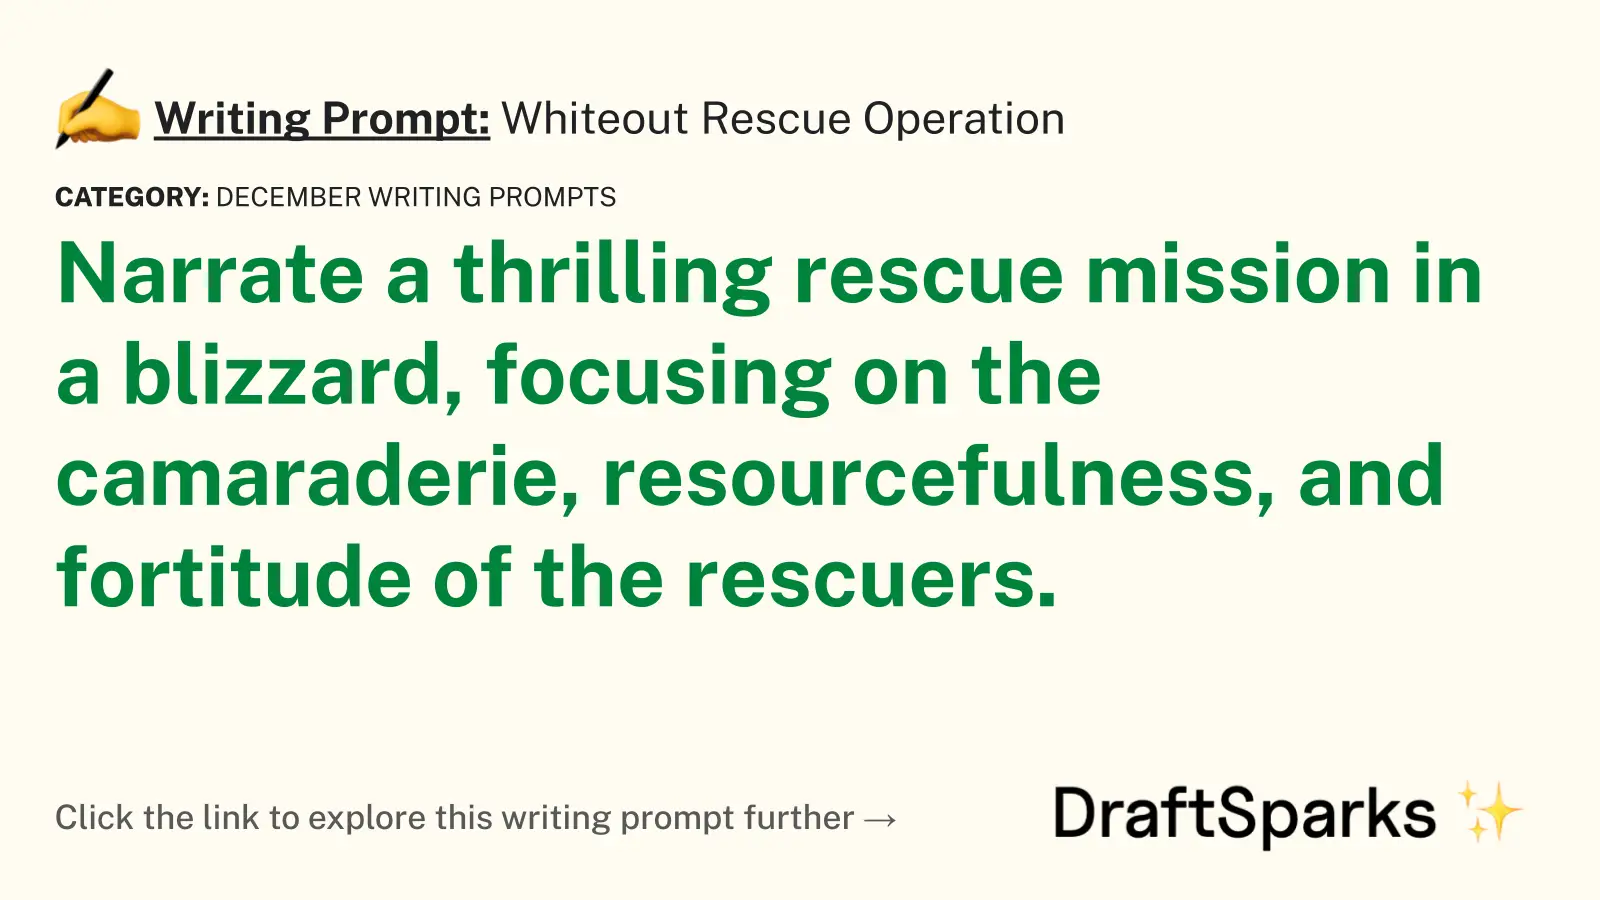 Whiteout Rescue Operation